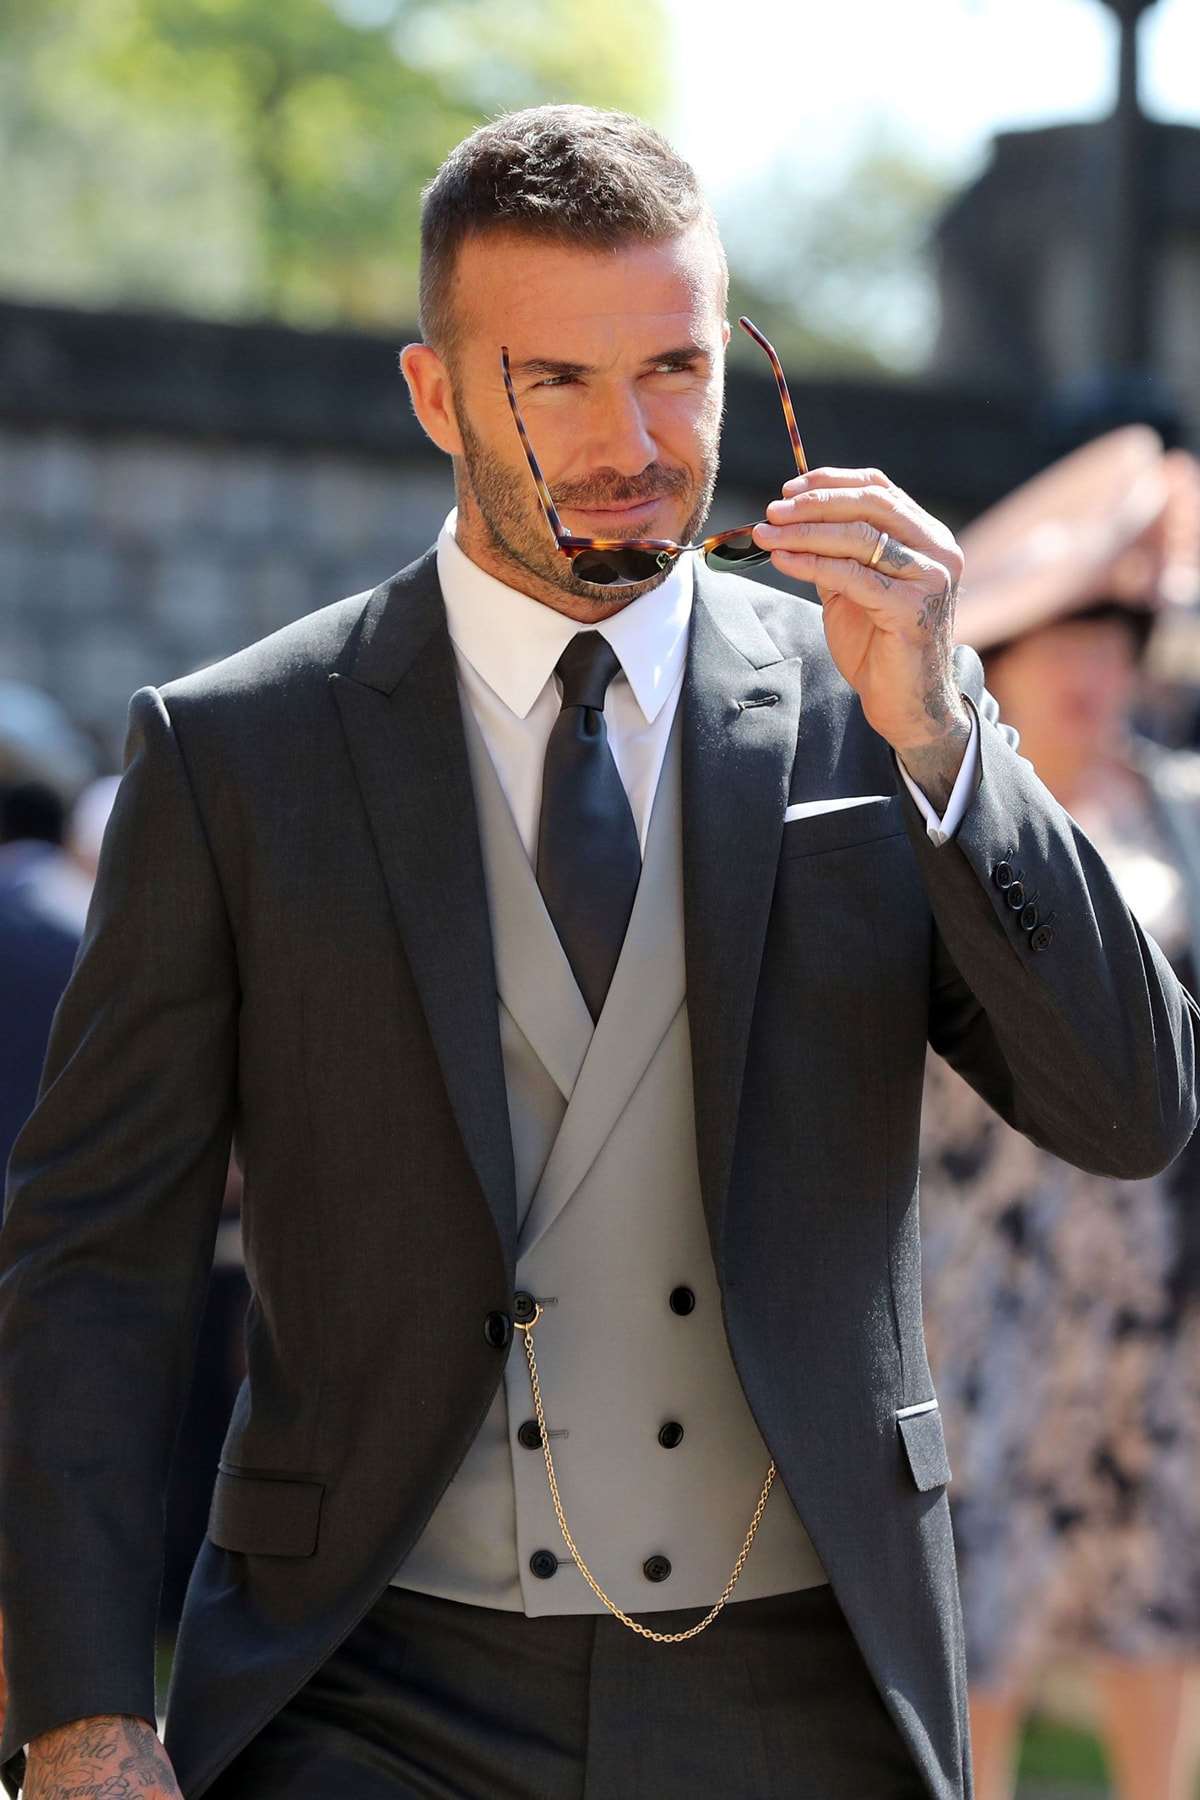 David Beckham Kim Jones Dior Homme Suit Royal Wedding Black Grey Three Piece Prince Harry Meghan Markle United Kingdom British Victoria Beckham Fashion